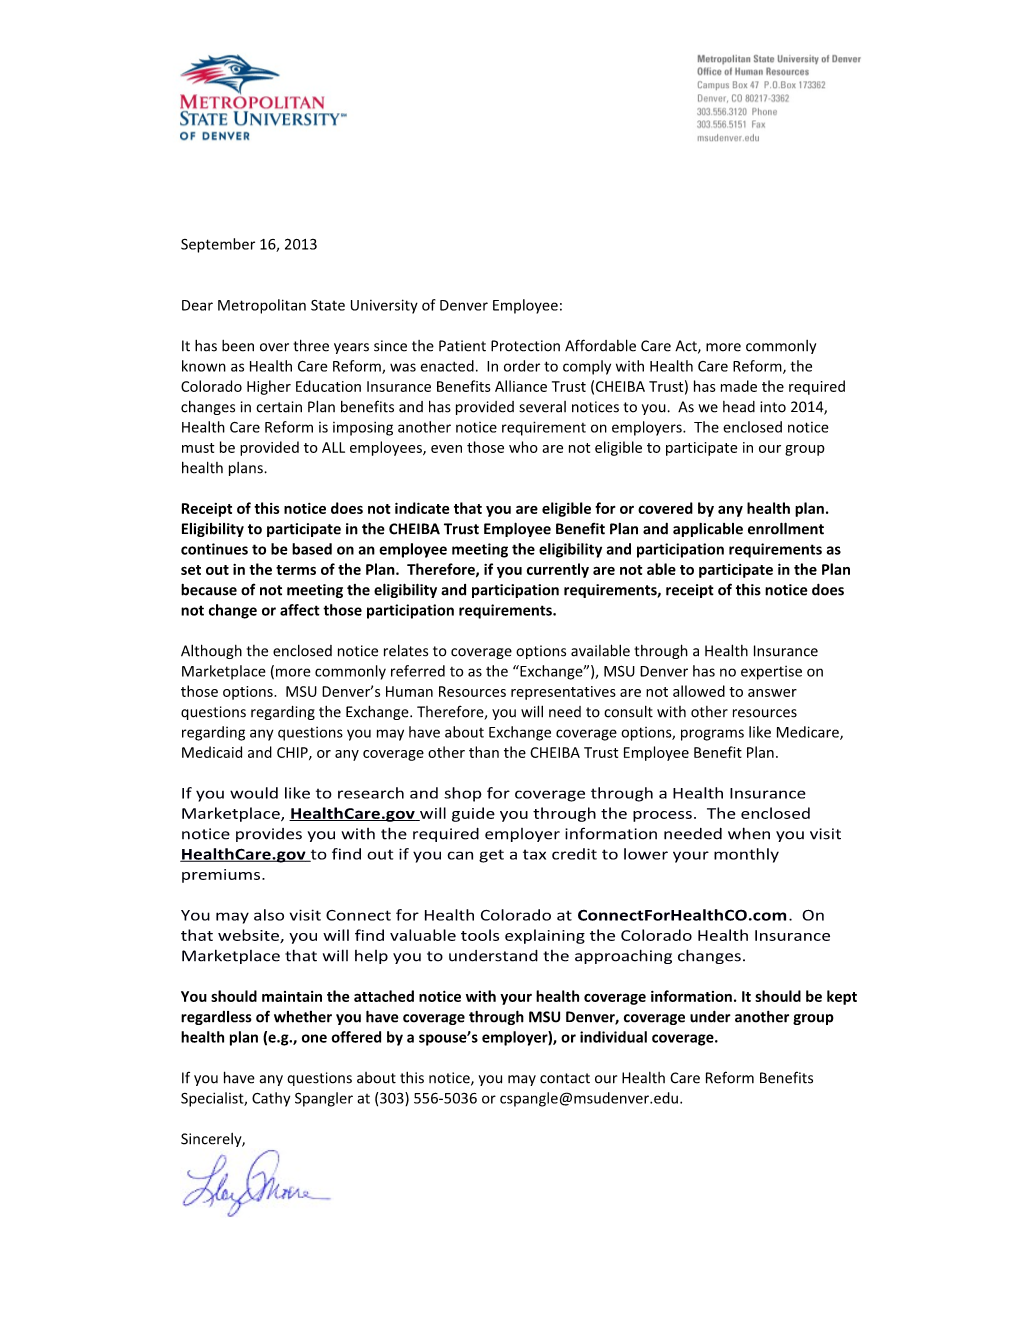 Dear Metropolitan State University of Denver Employee